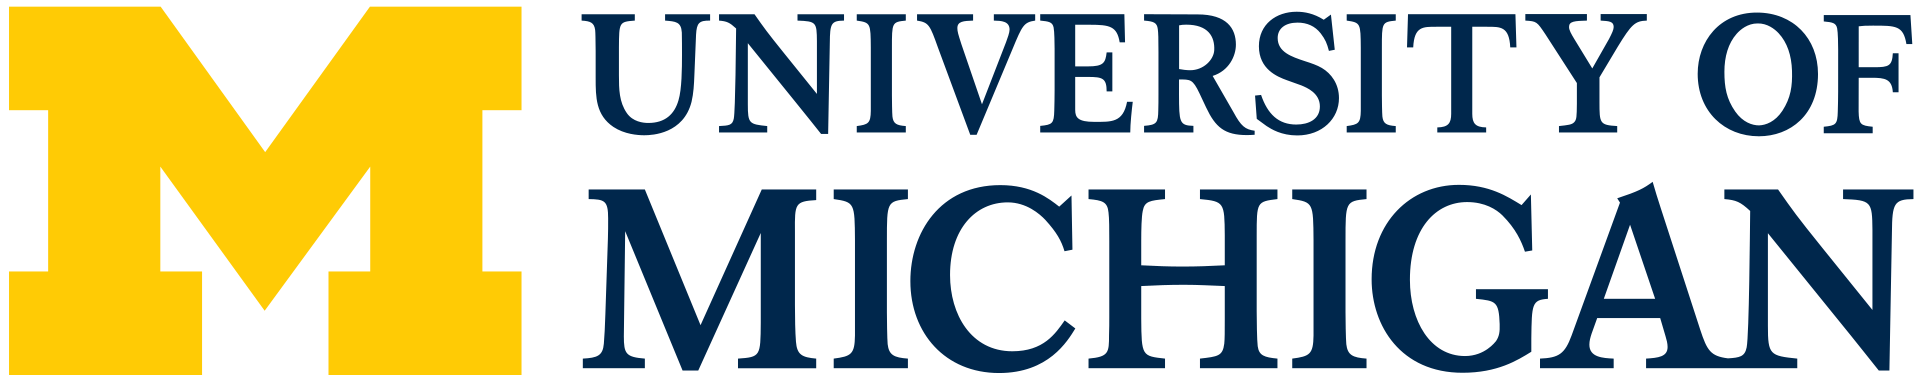 University of Michigan logo, By University of Michigan - https://vpcomm.umich.edu/brand/downloads/um-logo, Public Domain, https://commons.wikimedia.org/w/index.php?curid=71242380"